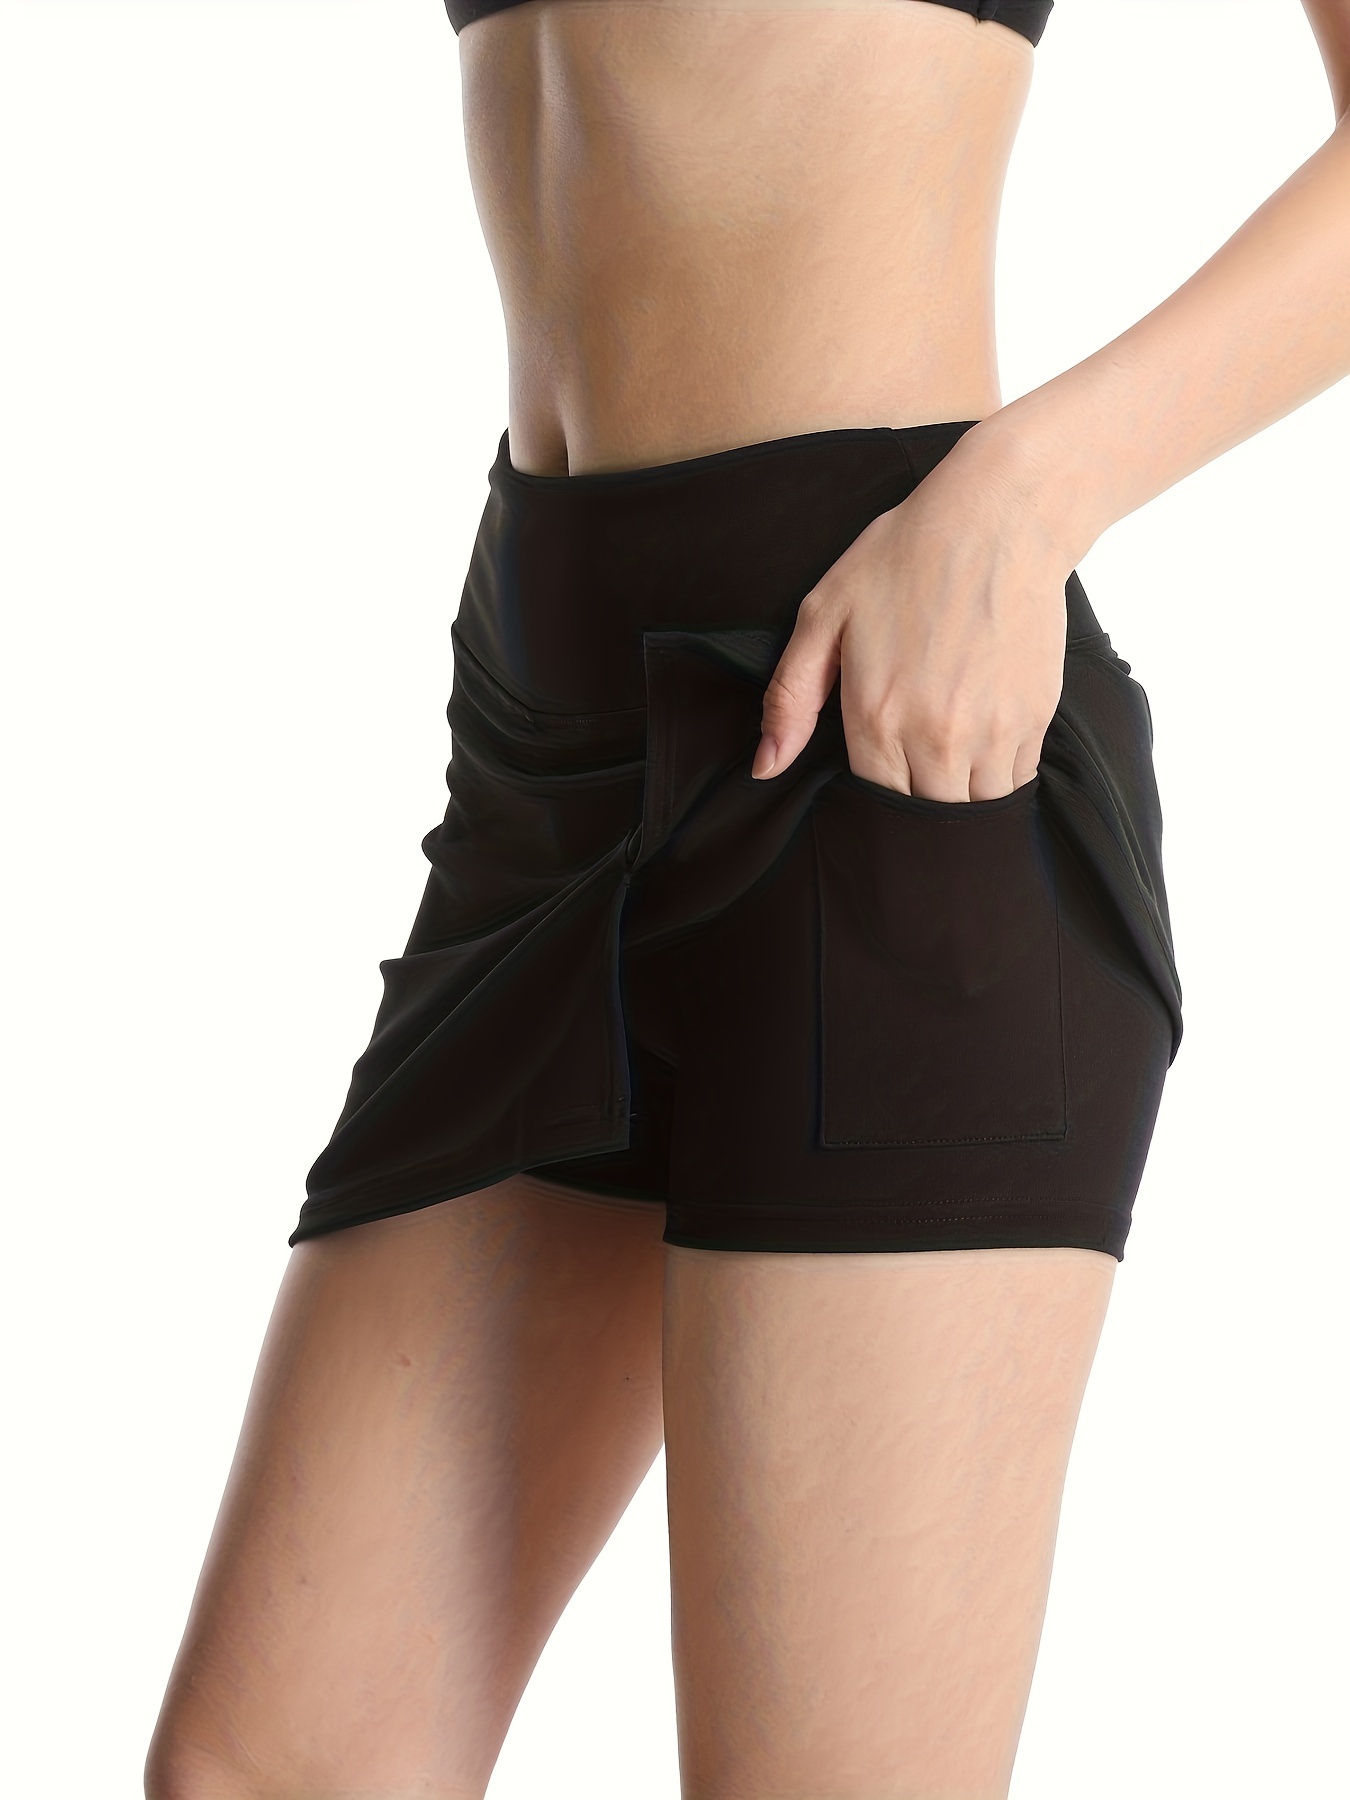 split hem sports skorts with pocket solid color running active skirts for golf tennis womens activewear